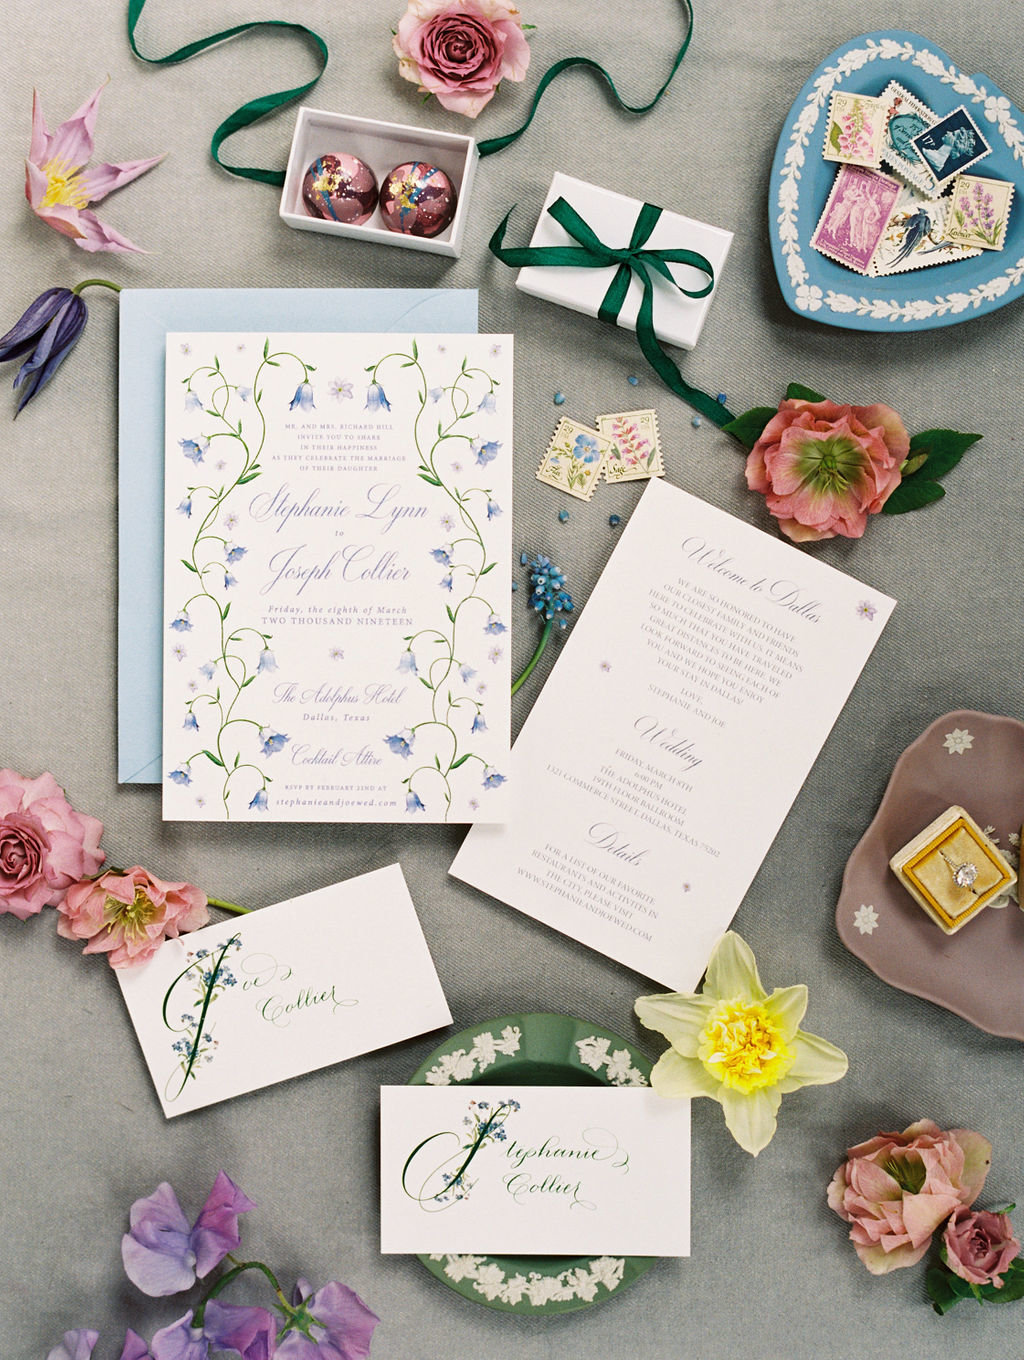 The Wildflowers Wedding Blog Inspiration Stylish Fun Contemporary Weddings Attainable Planning Advice Rebecca Marin Shepherd20